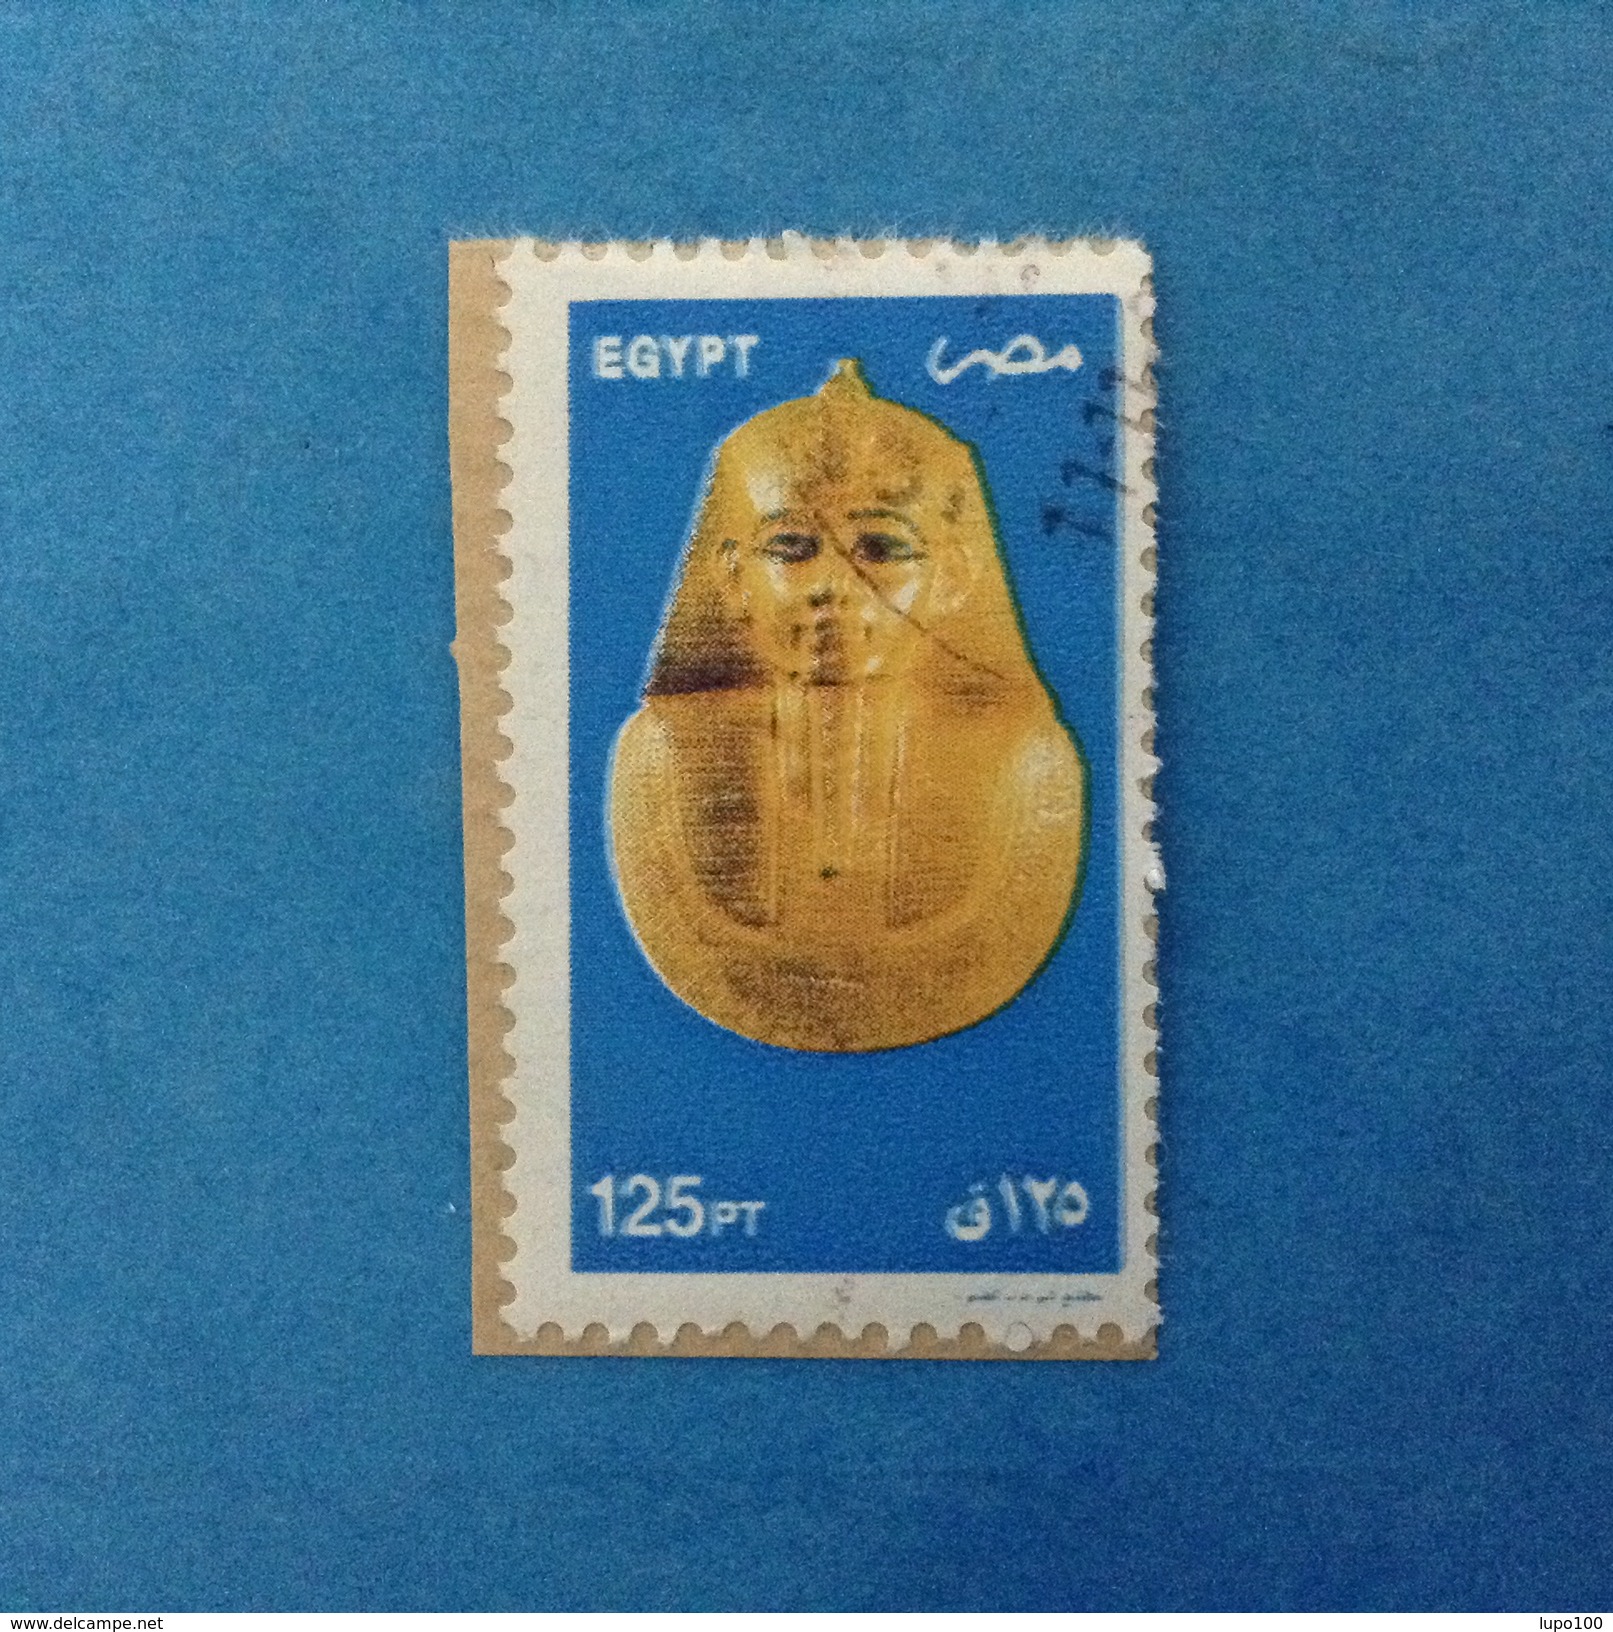 2002 EGITTO EGYPT FRANCOBOLLO USATO STAMP USED - MASCHERA FARAONE 125 - Usati